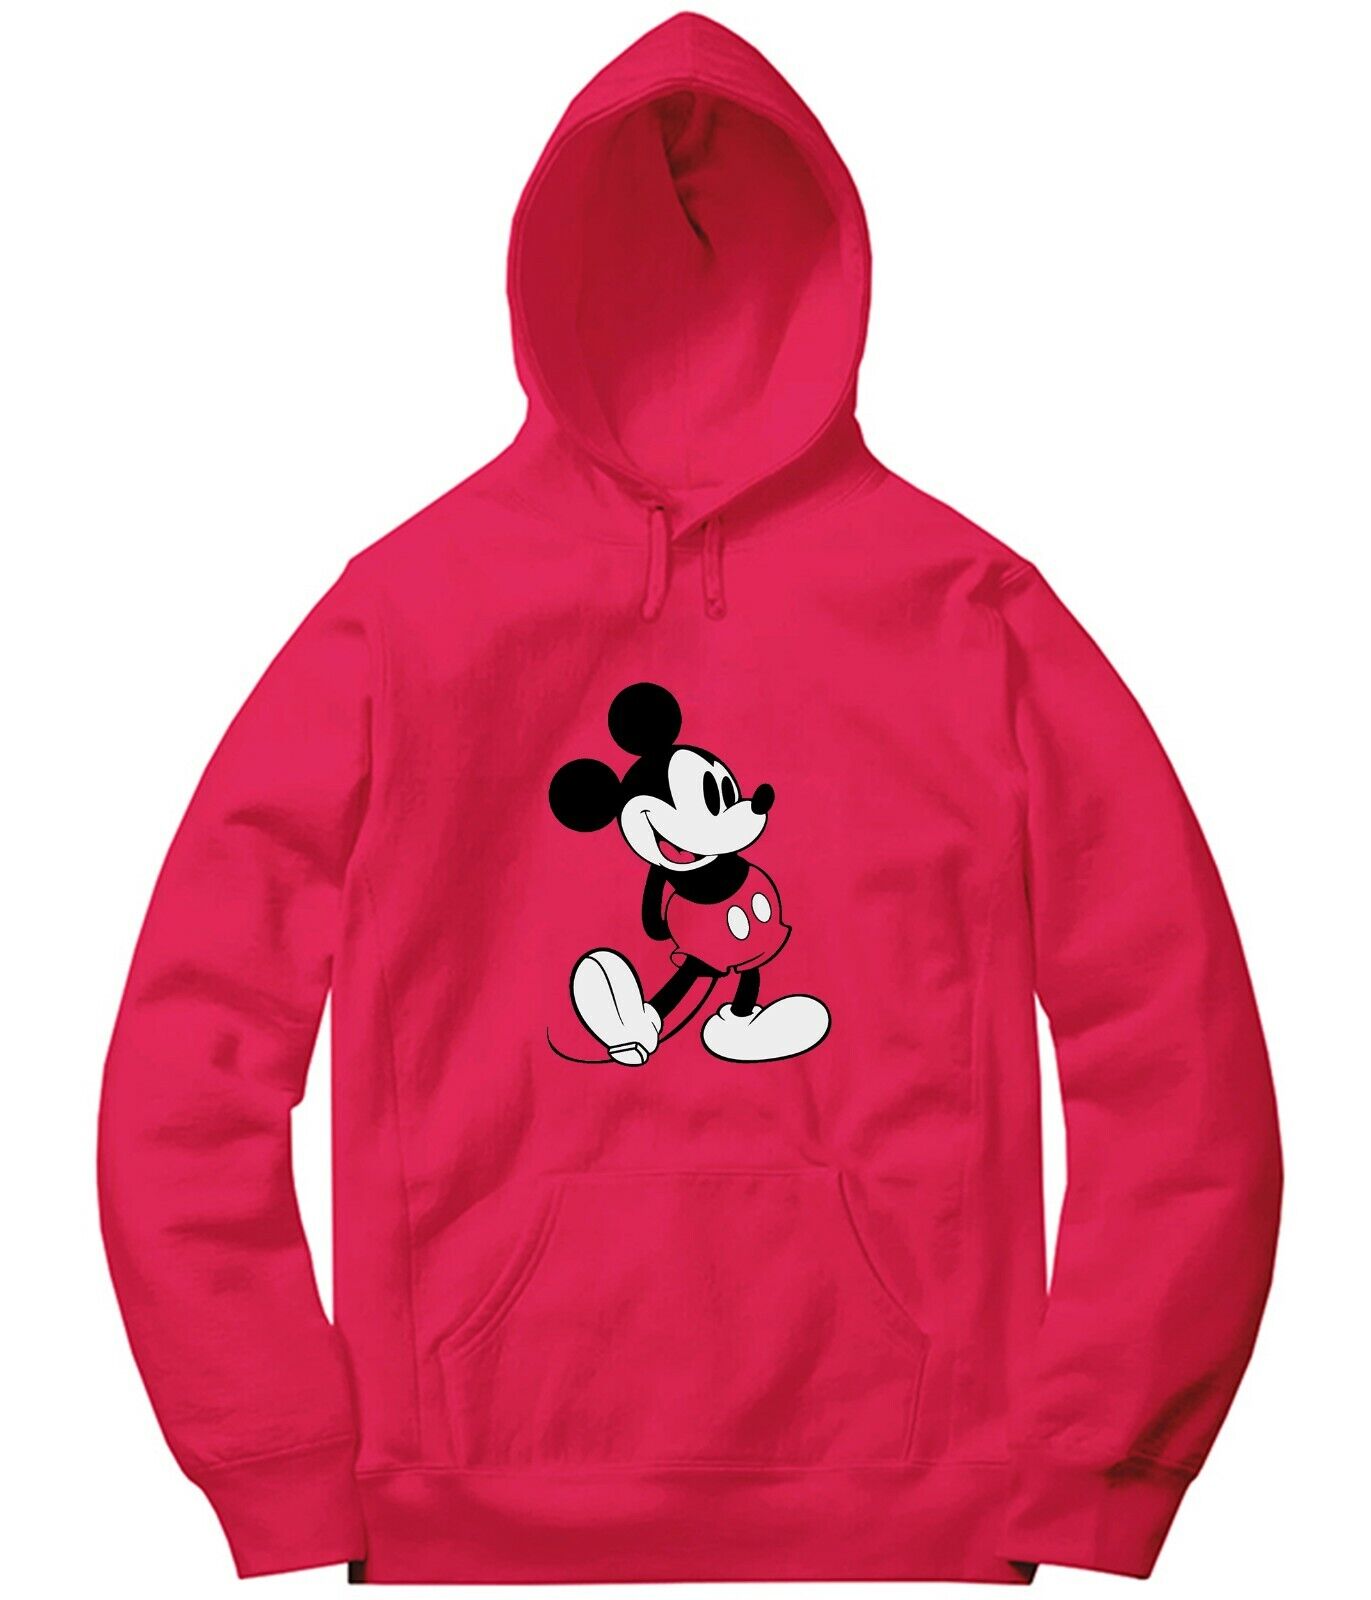 Classic Mickey Mouse Black & White Long Sweatshirt Jacket Pullov